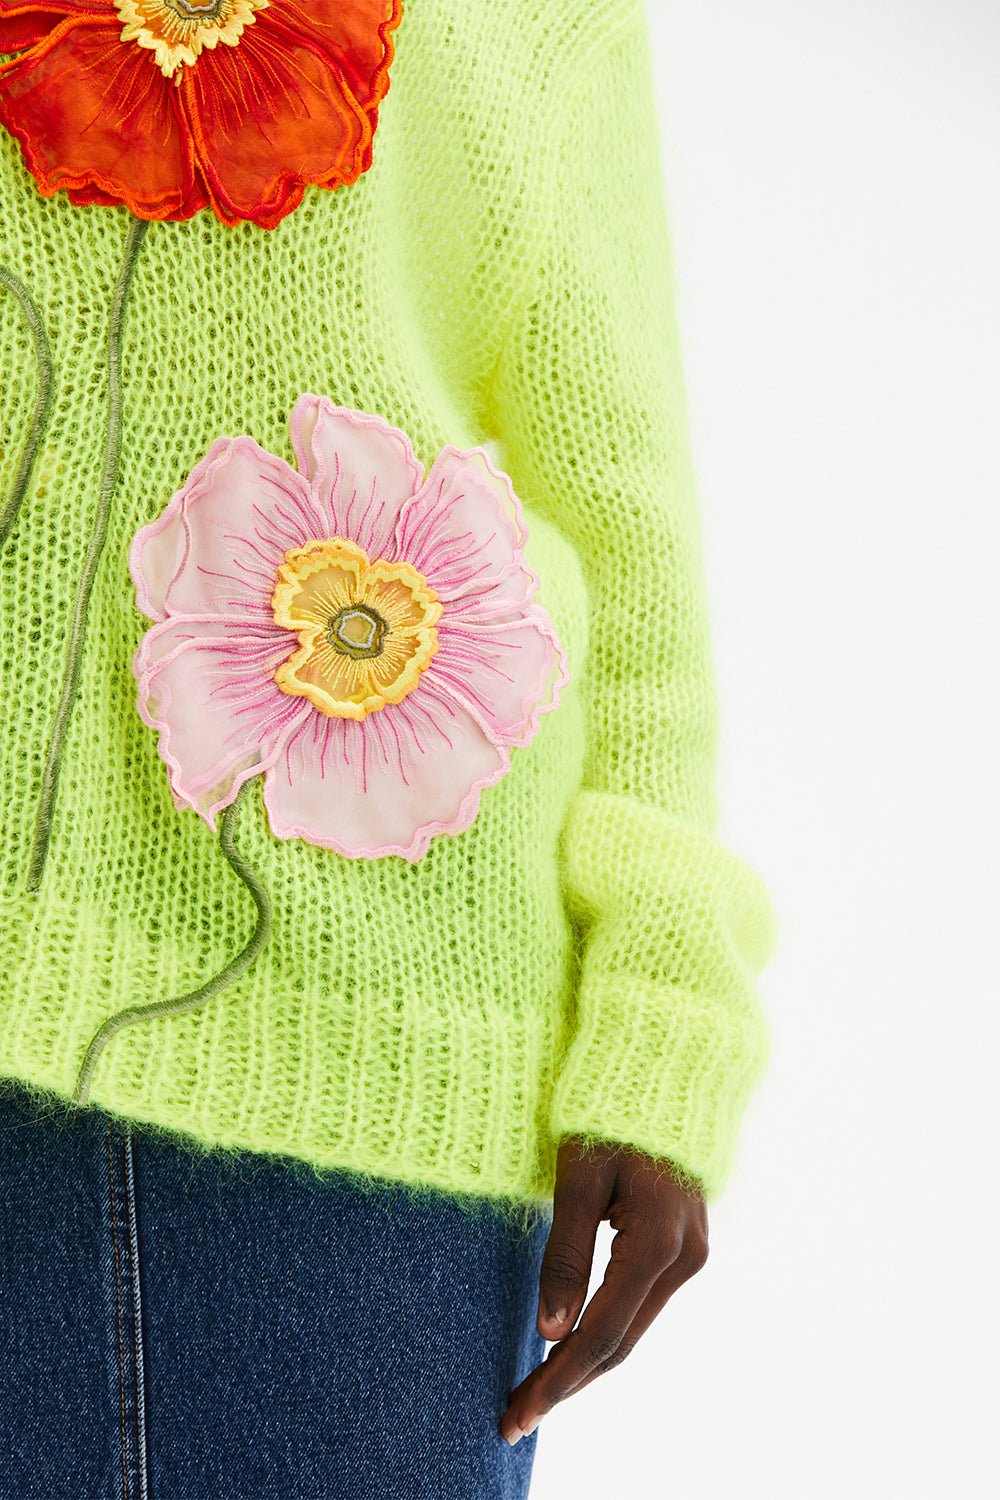 OSCAR DE LA RENTA-Off The Shoulder Poppy Embroidered Pullover-